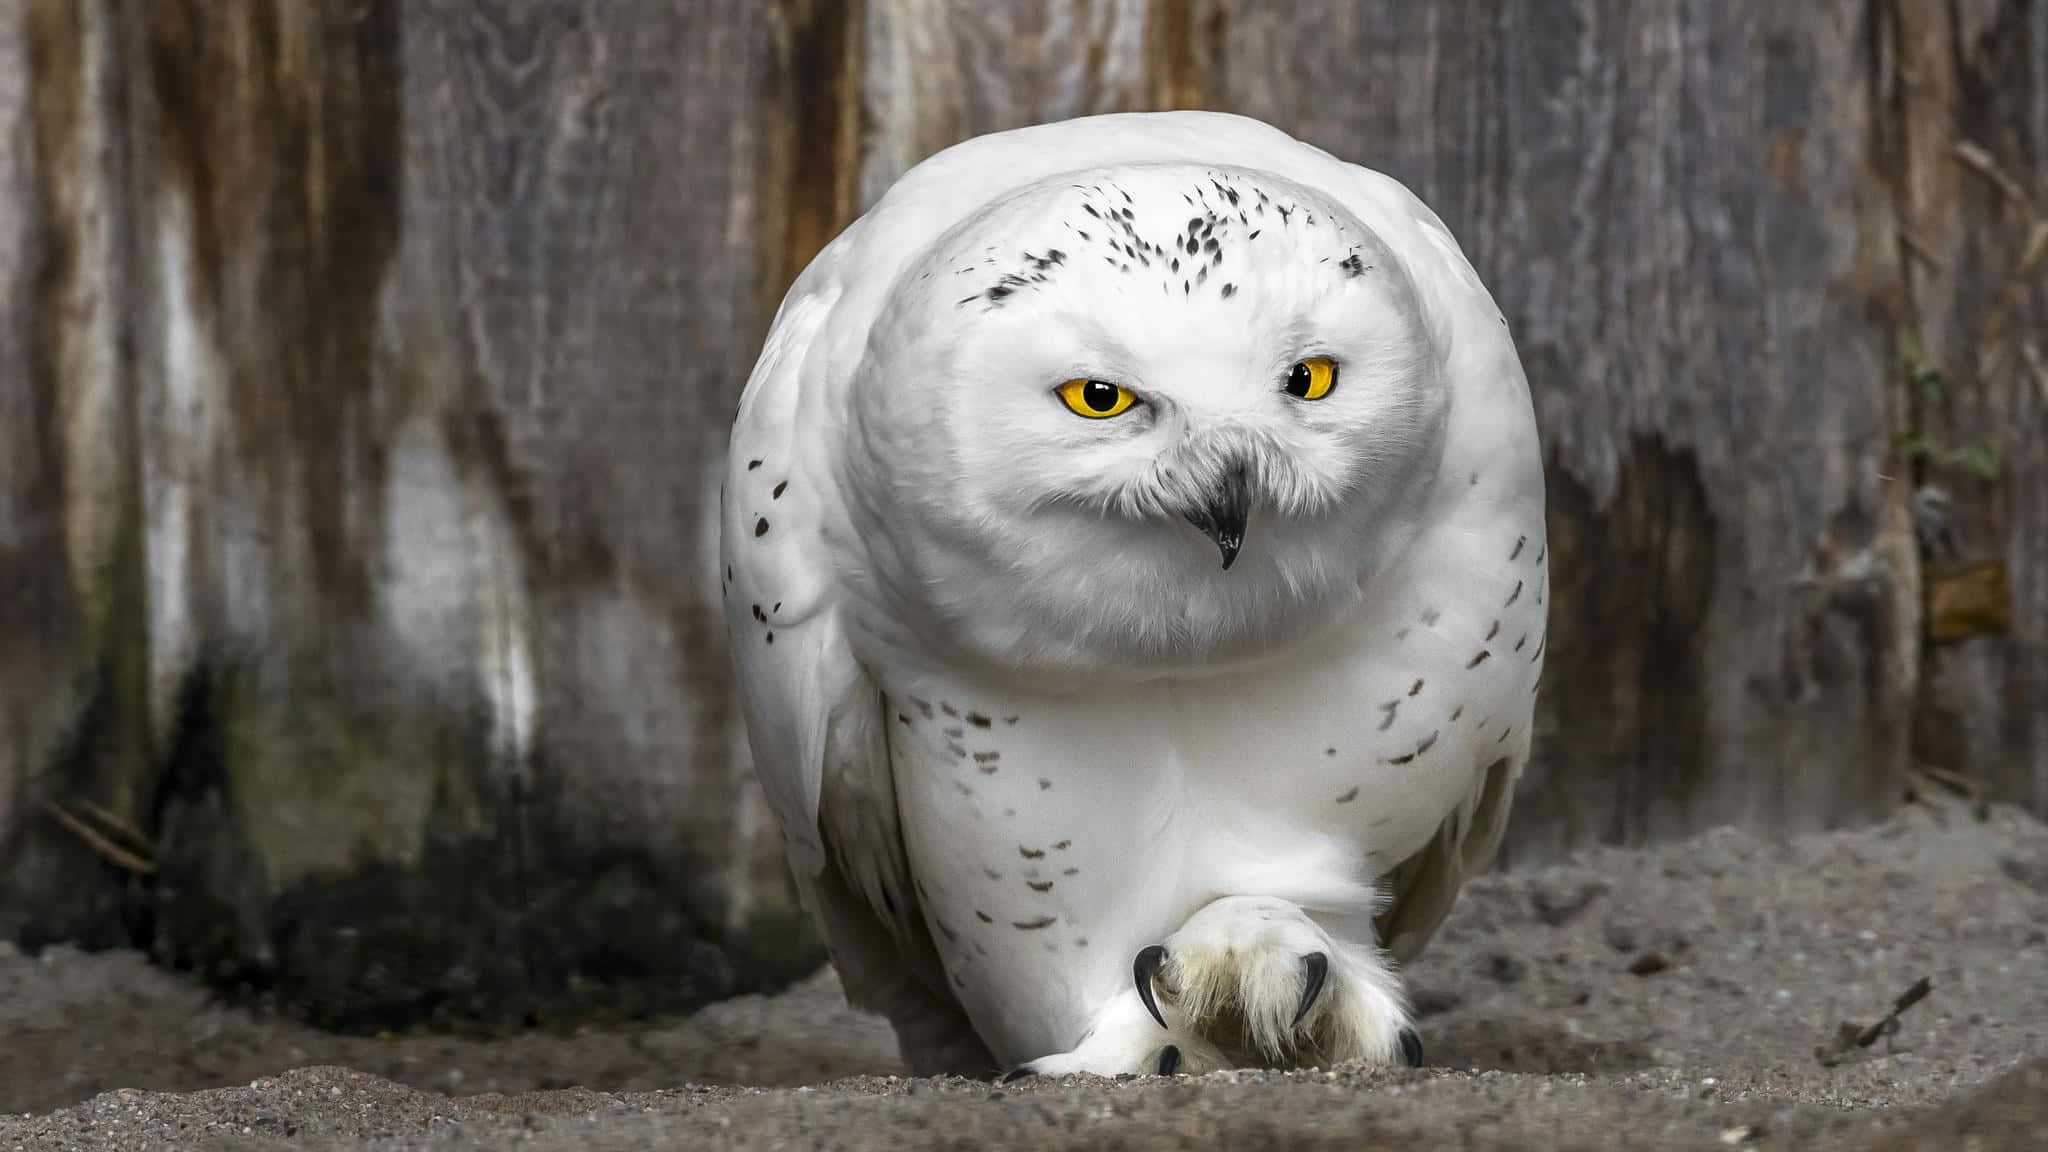 Cute White Owl Bird Picture